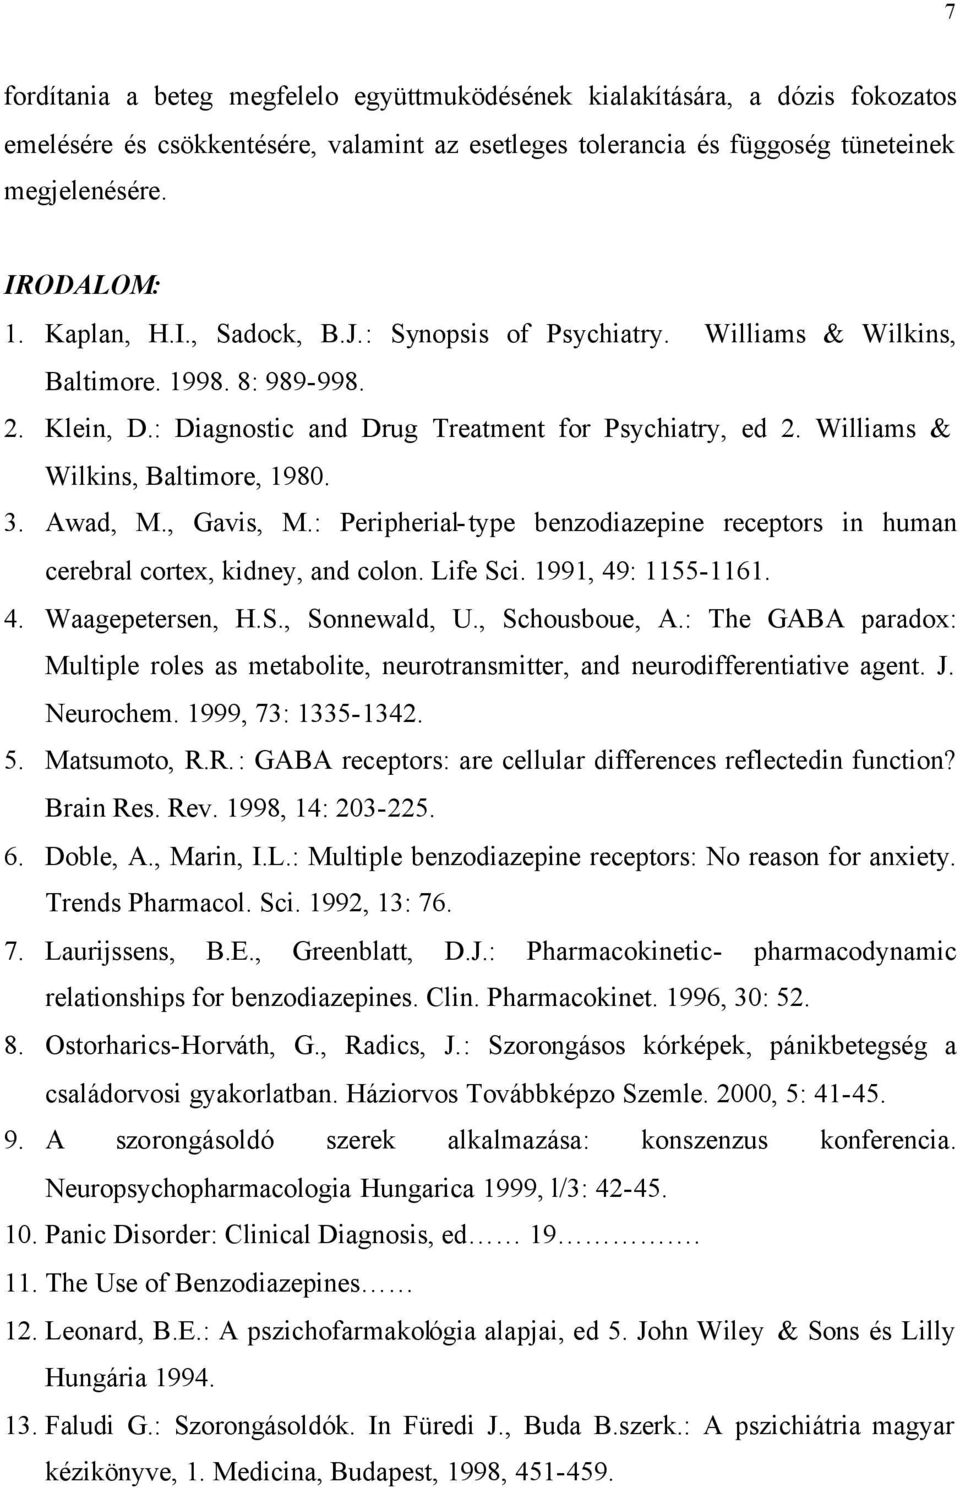 Williams & Wilkins, Baltimore, 1980. 3. Awad, M., Gavis, M.: Peripherial-type benzodiazepine receptors in human cerebral cortex, kidney, and colon. Life Sci. 1991, 49: 1155-1161. 4. Waagepetersen, H.